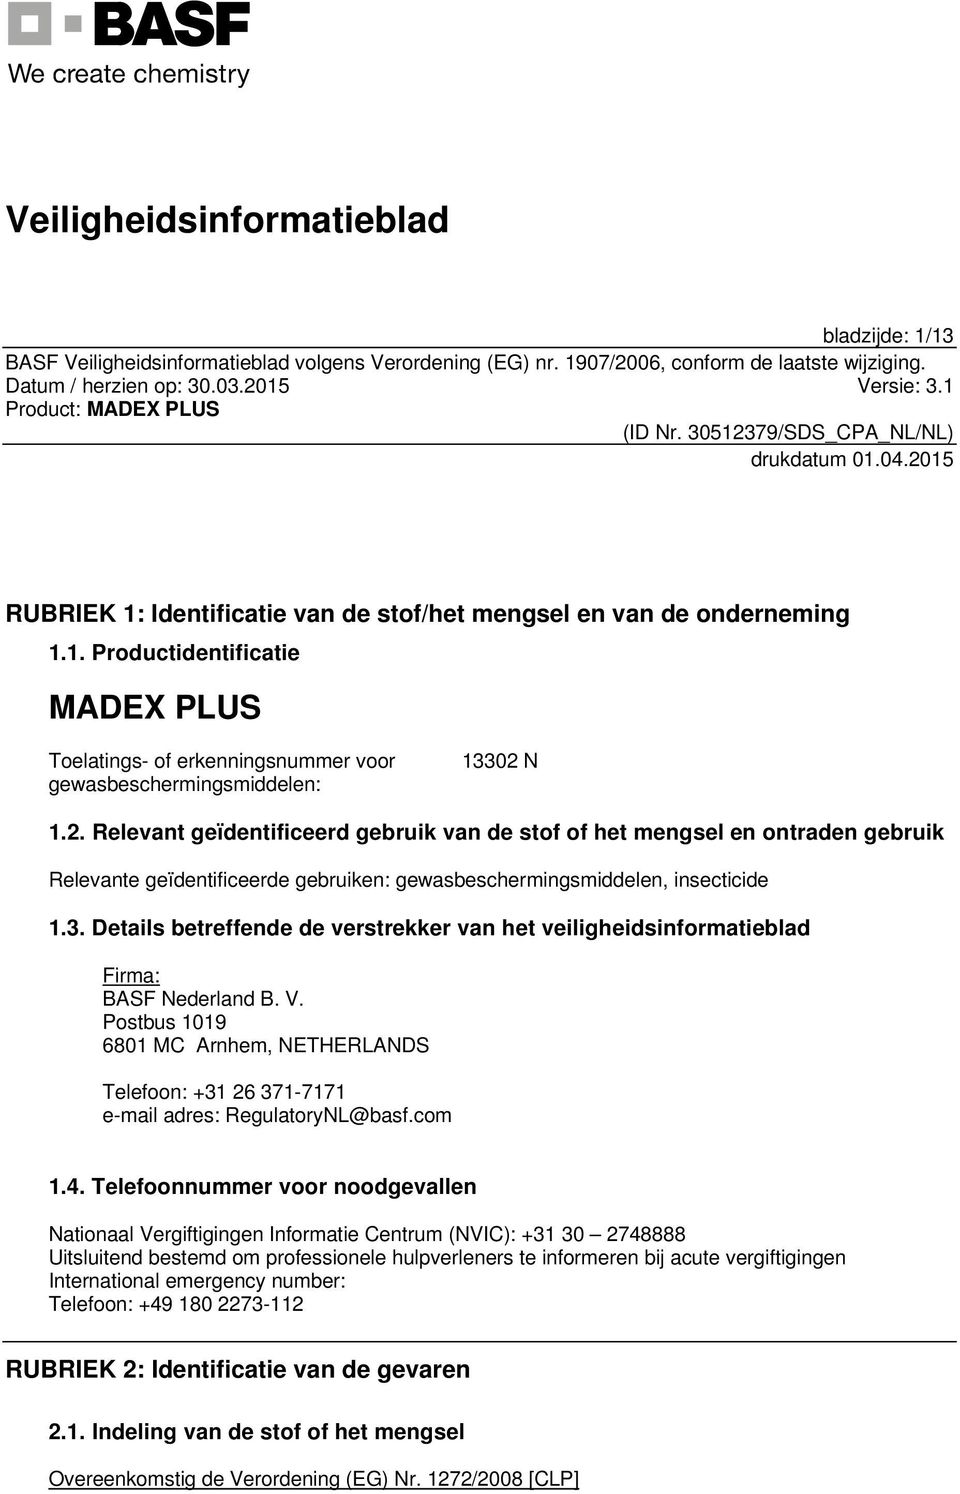 Details betreffende de verstrekker van het veiligheidsinformatieblad Firma: BASF Nederland B. V. Postbus 1019 6801 MC Arnhem, NETHERLANDS Telefoon: +31 26 371-7171 e-mail adres: RegulatoryNL@basf.